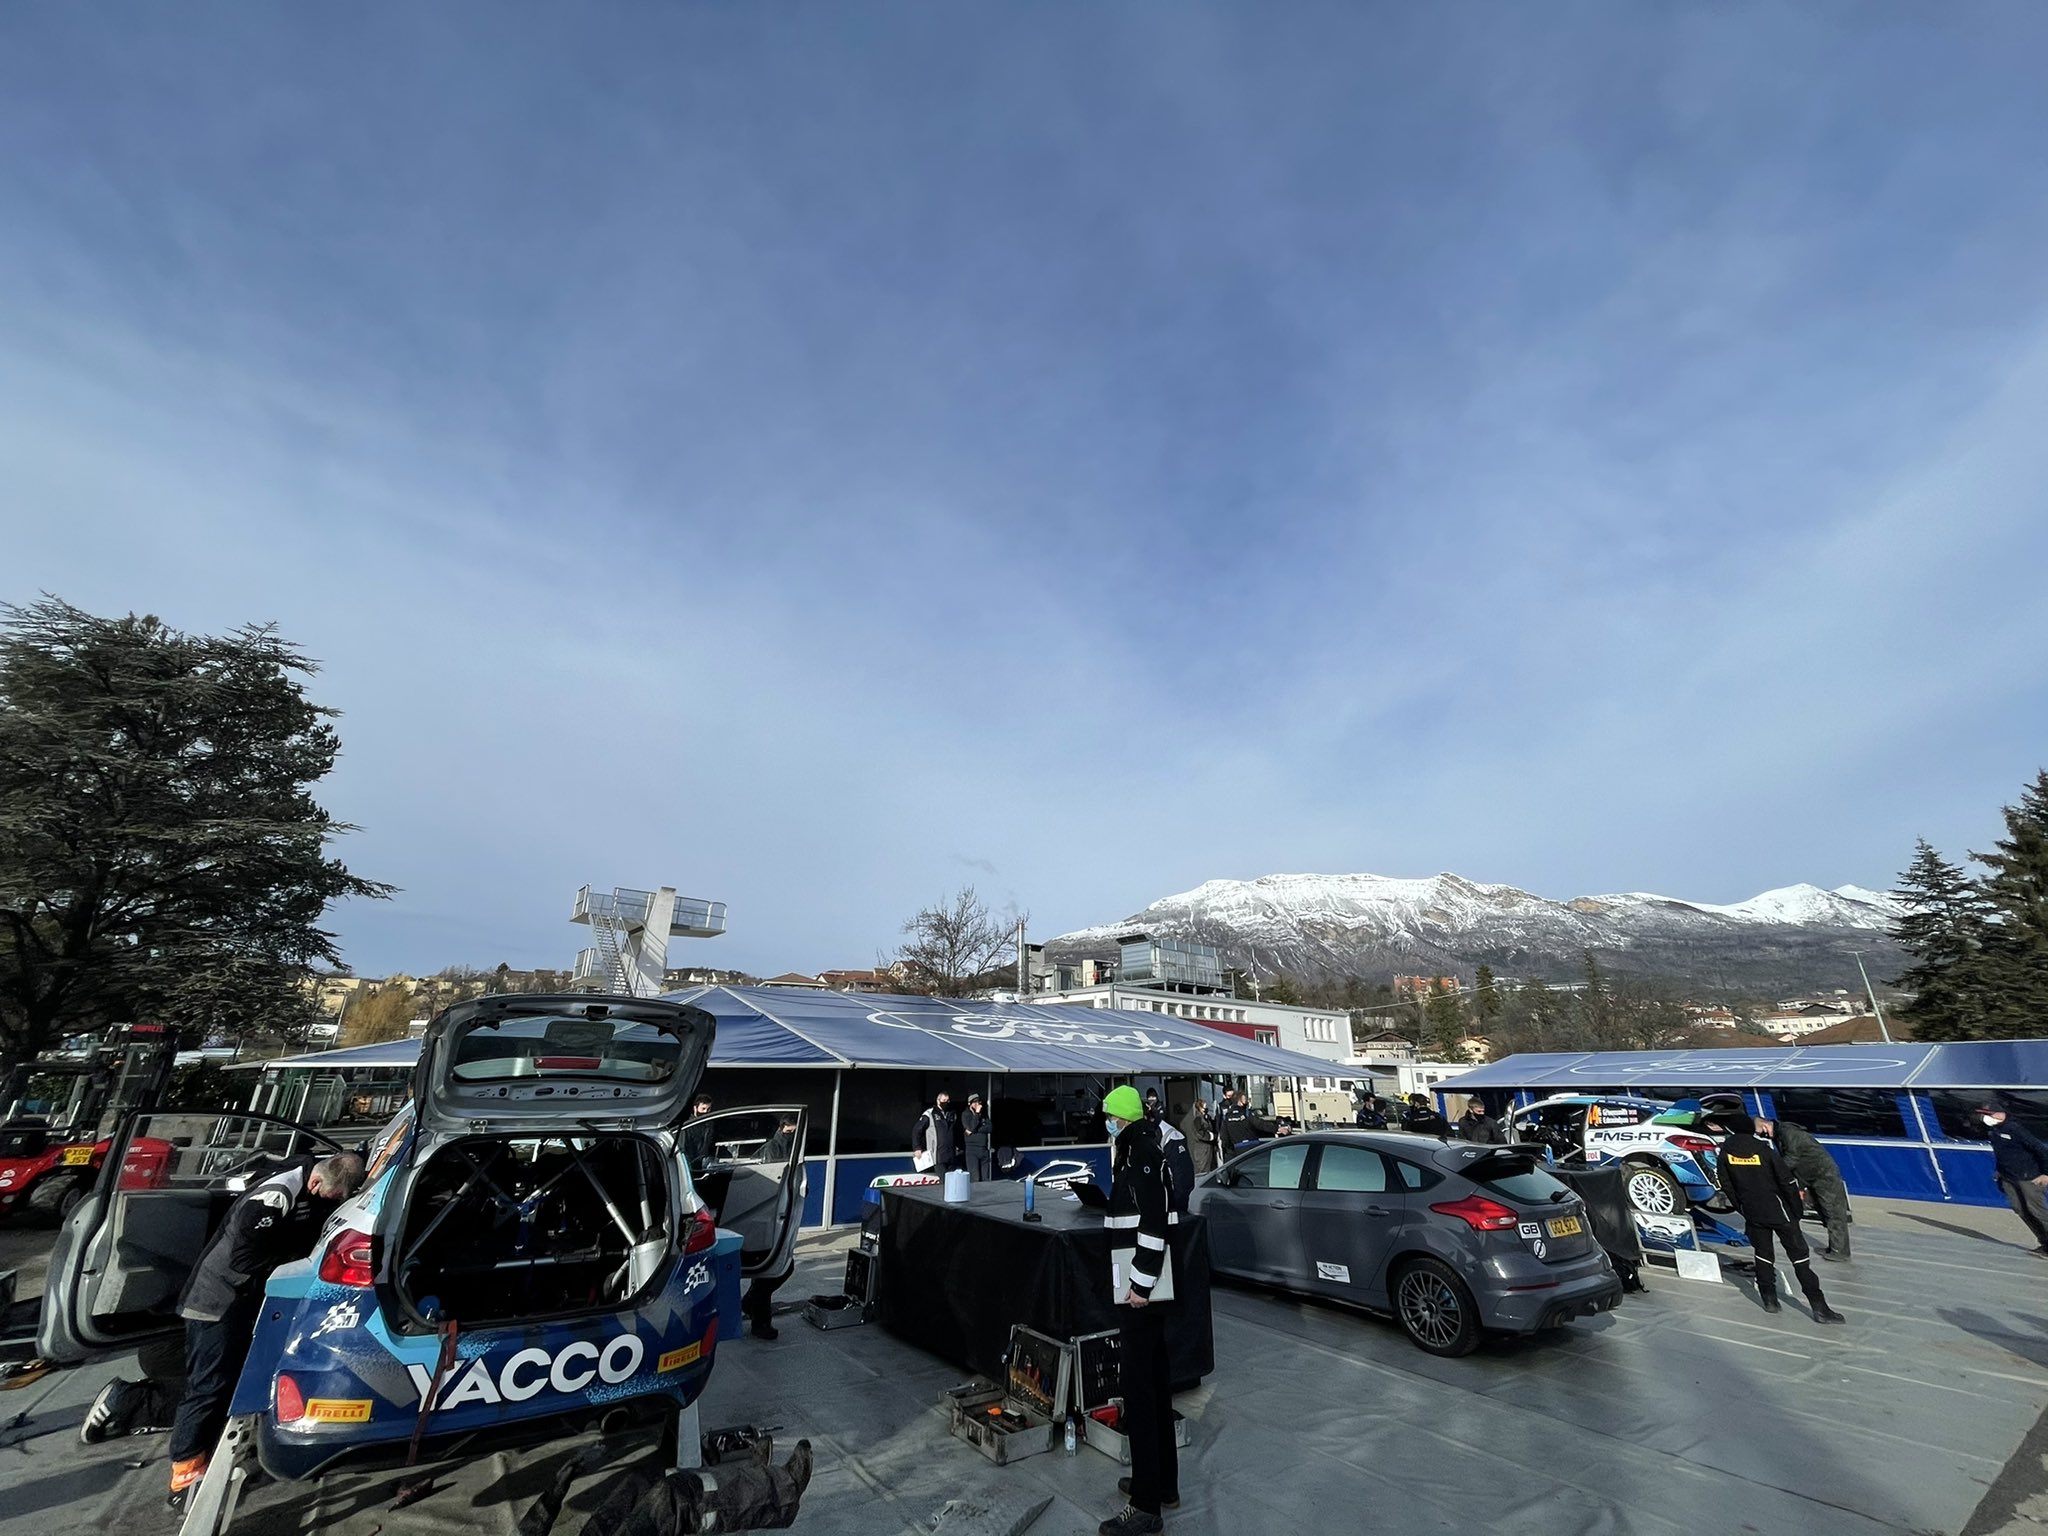 SkodaFabiaRally2Evo - WRC: 89º Rallye Automobile de Monte-Carlo [18-24 Enero] - Página 12 EsaJ6s4XYAAa3AW?format=jpg&name=large